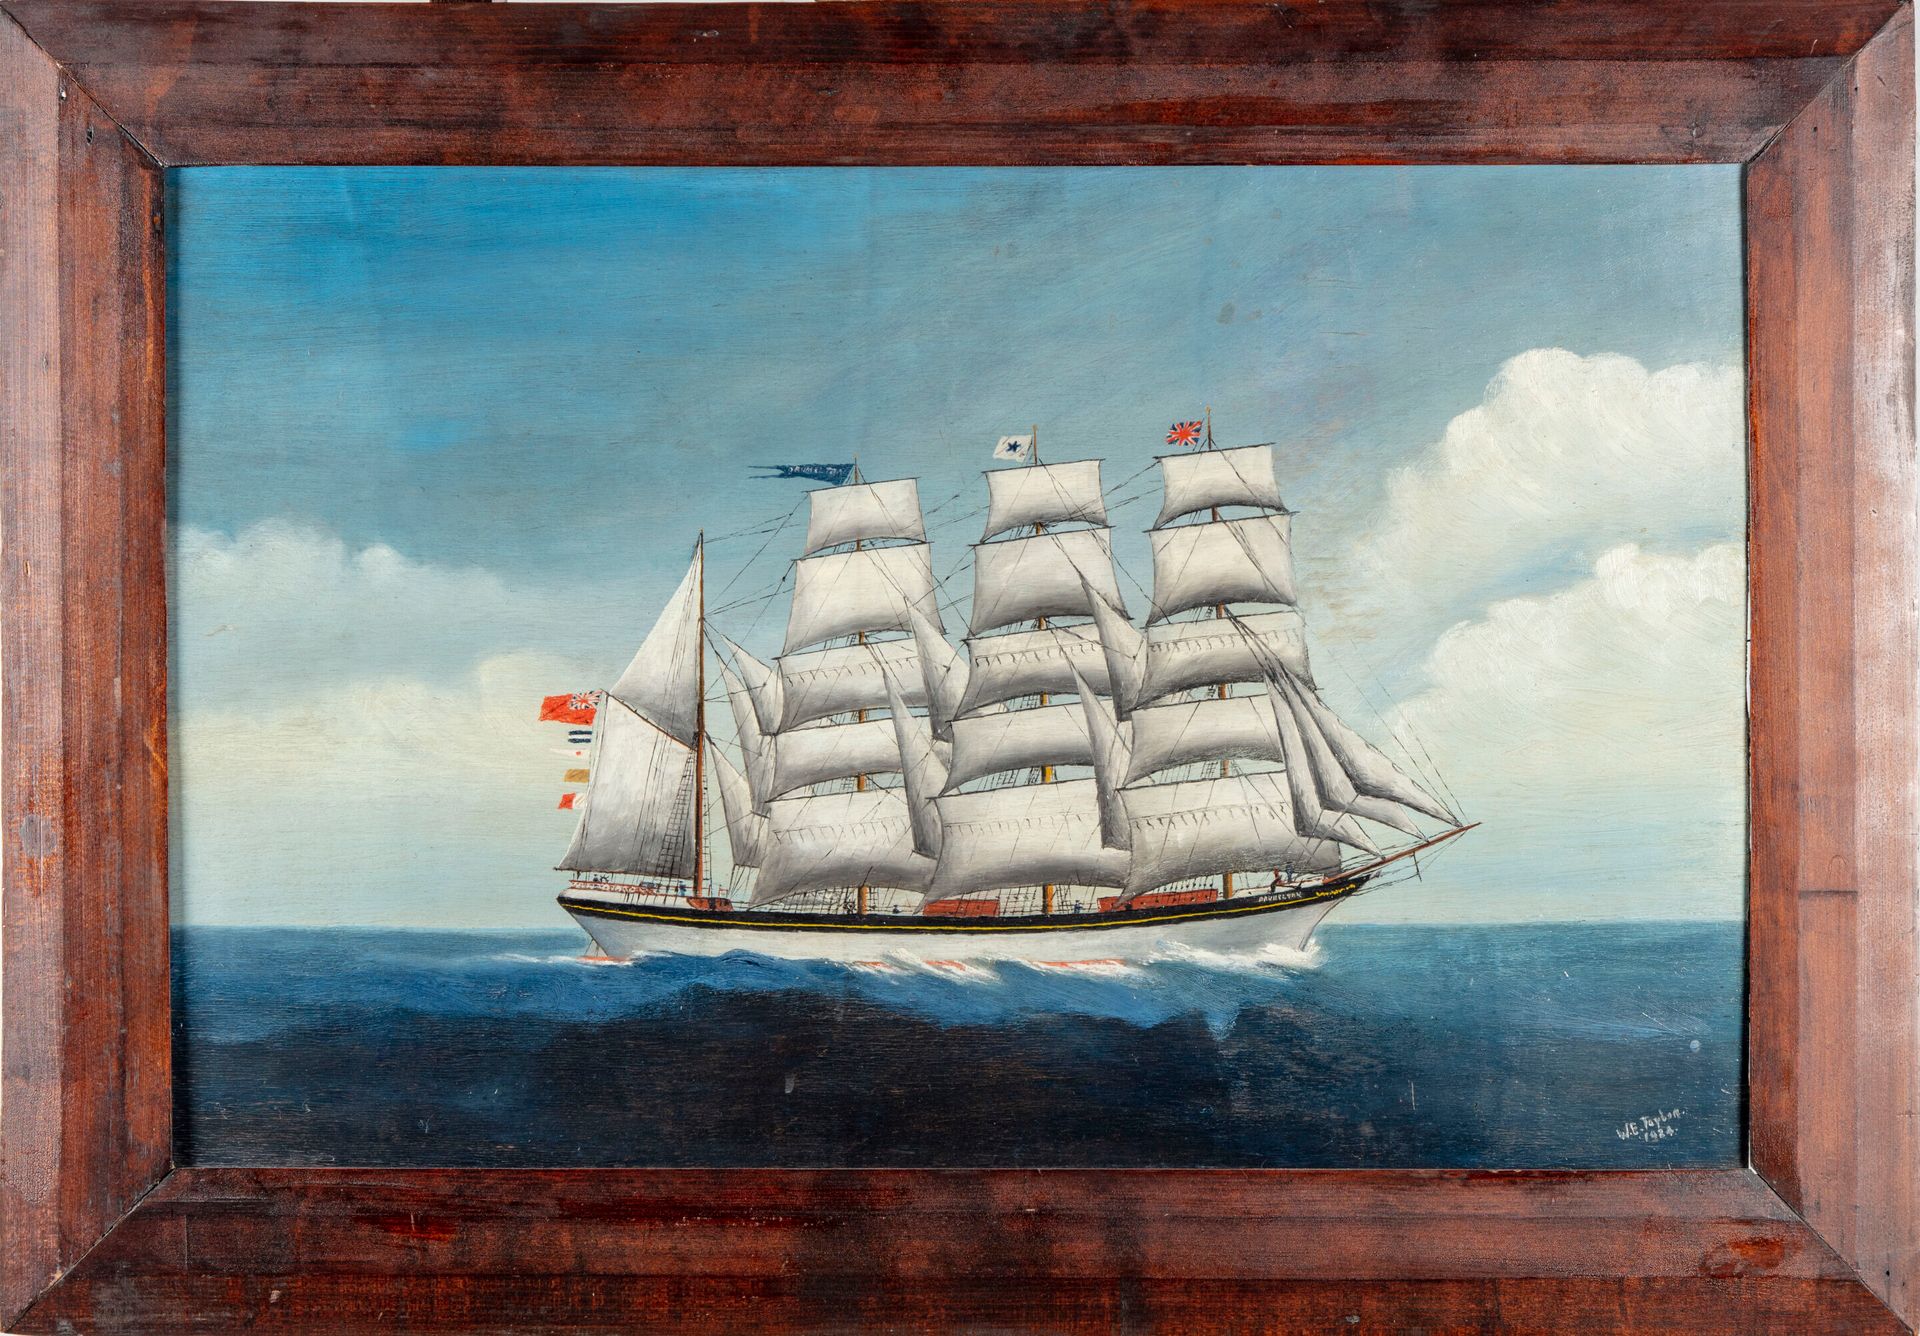 Null W.E. TAYLOR (20)

帆船

面板油画，右下角有签名，日期为 "1924年

53 x 81 cm